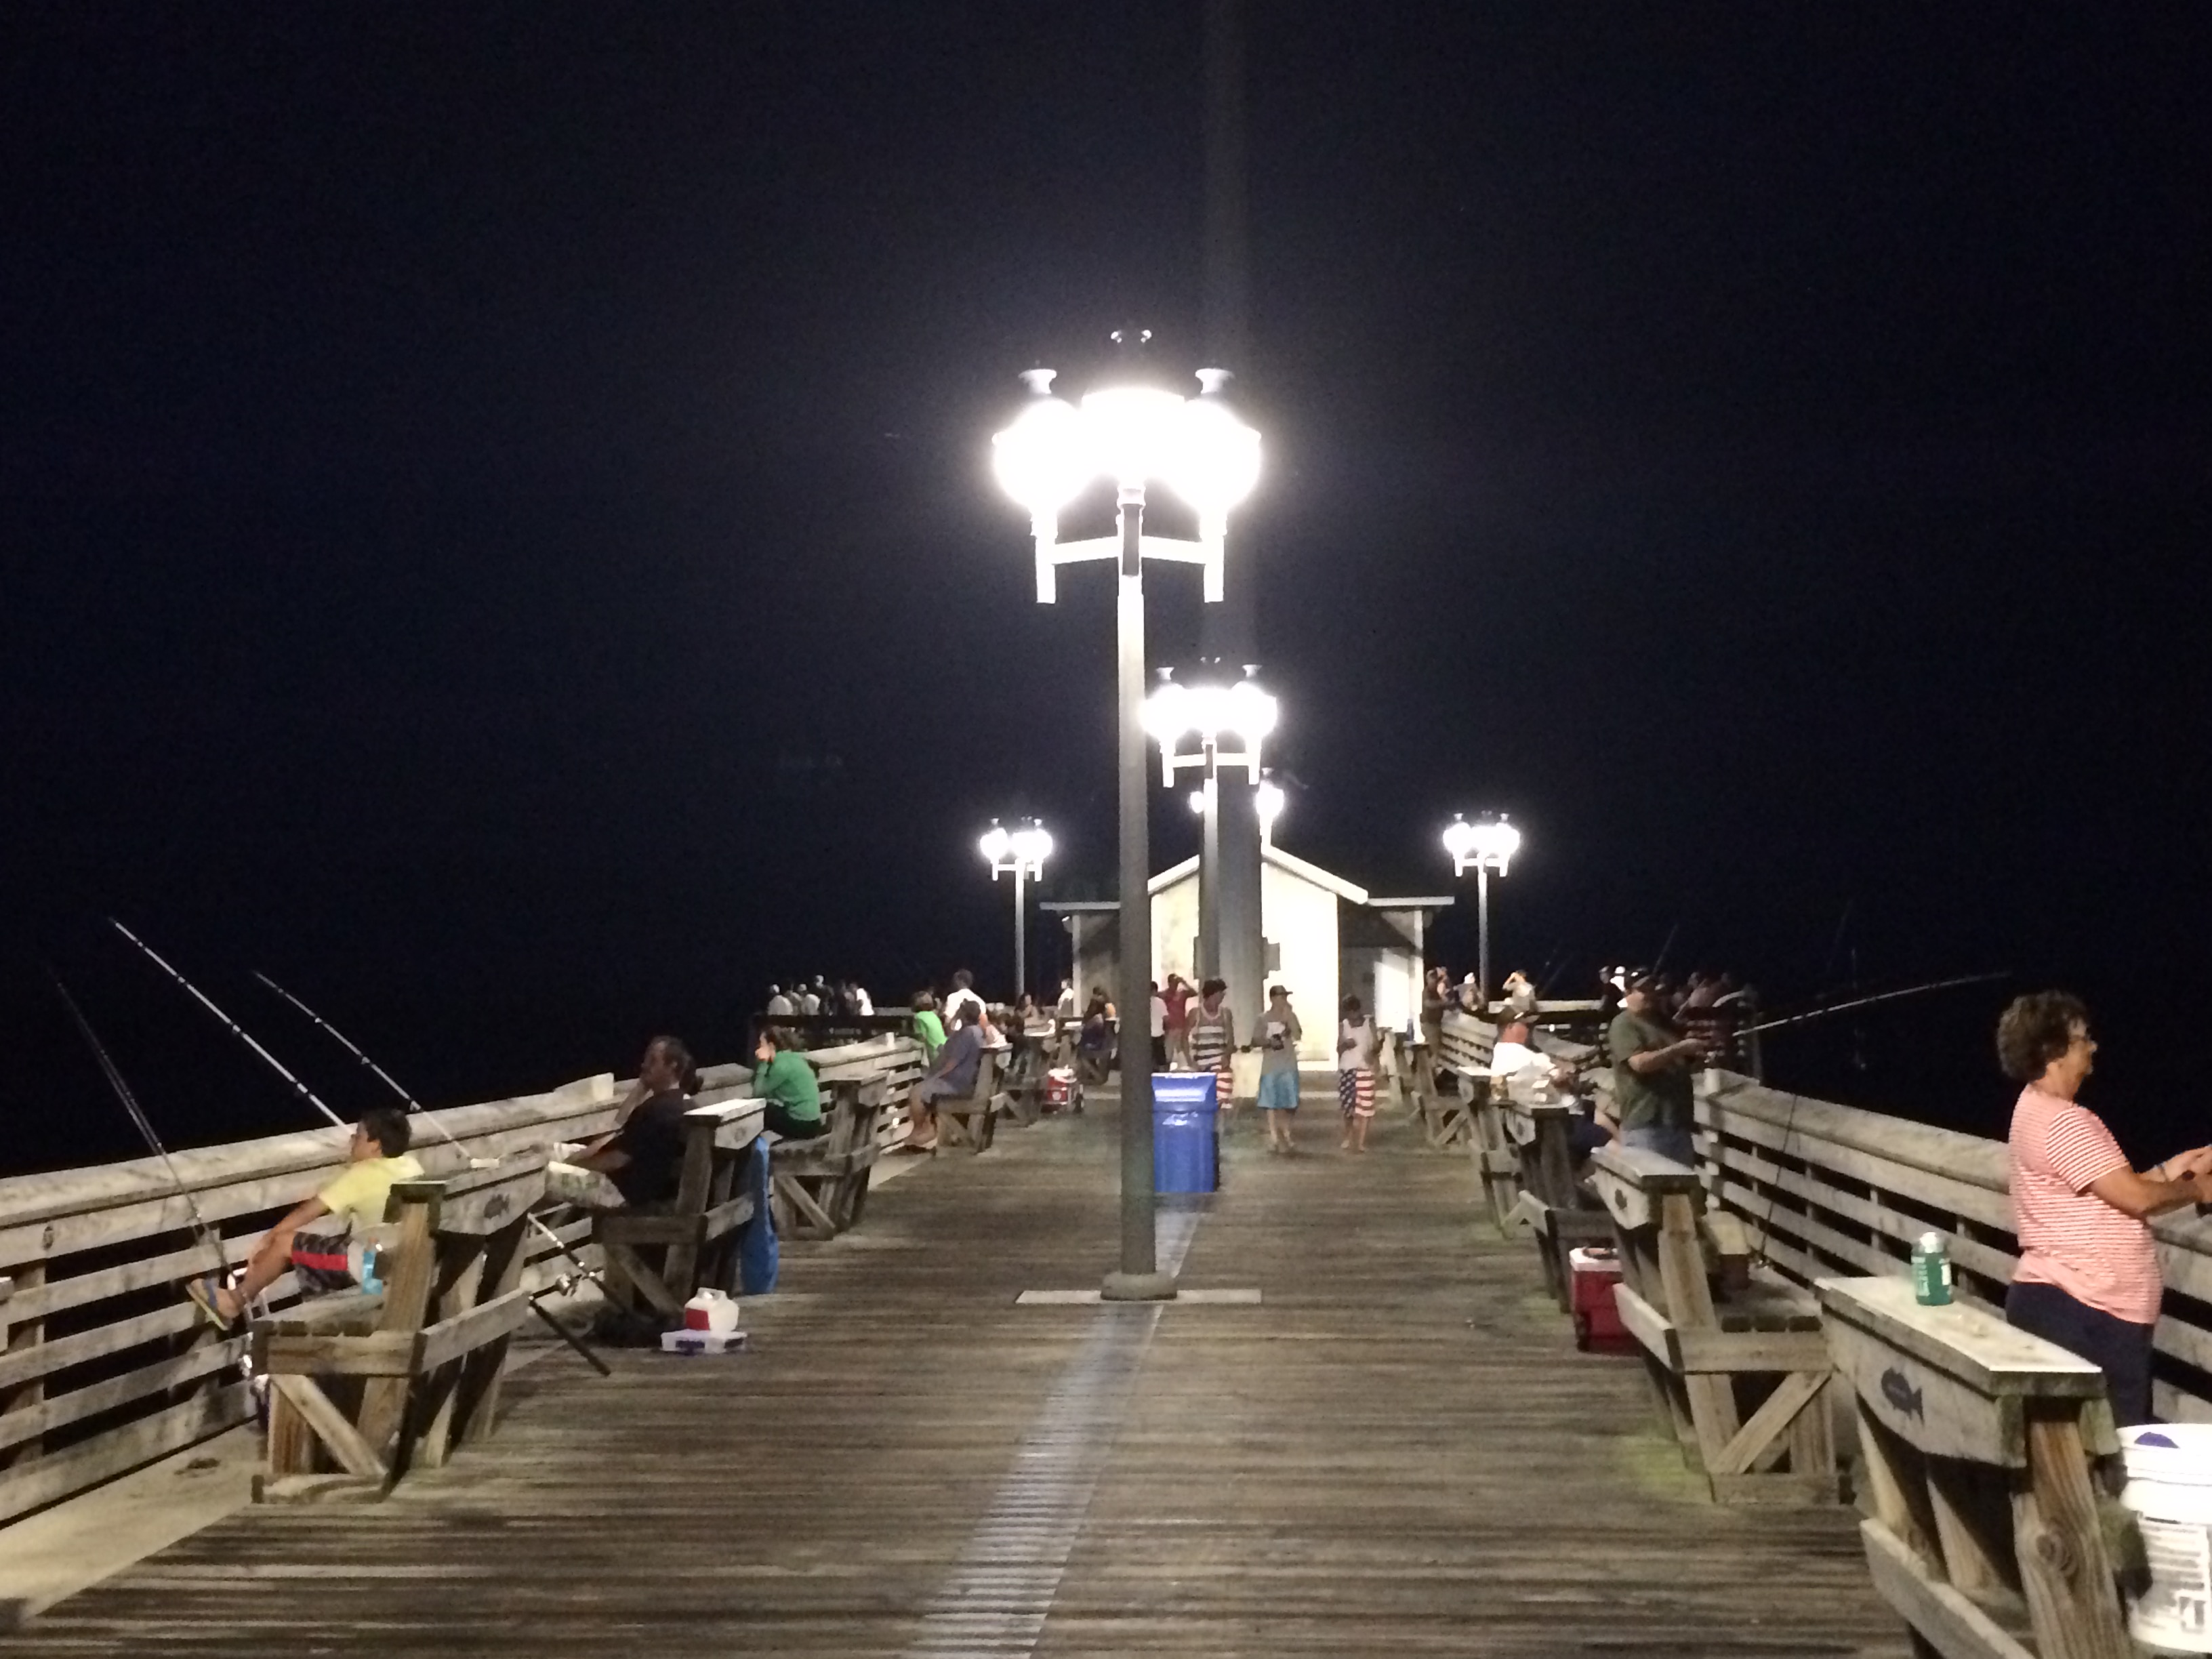 Night-time Pier Fishing - Capt Tony's Walkingangler